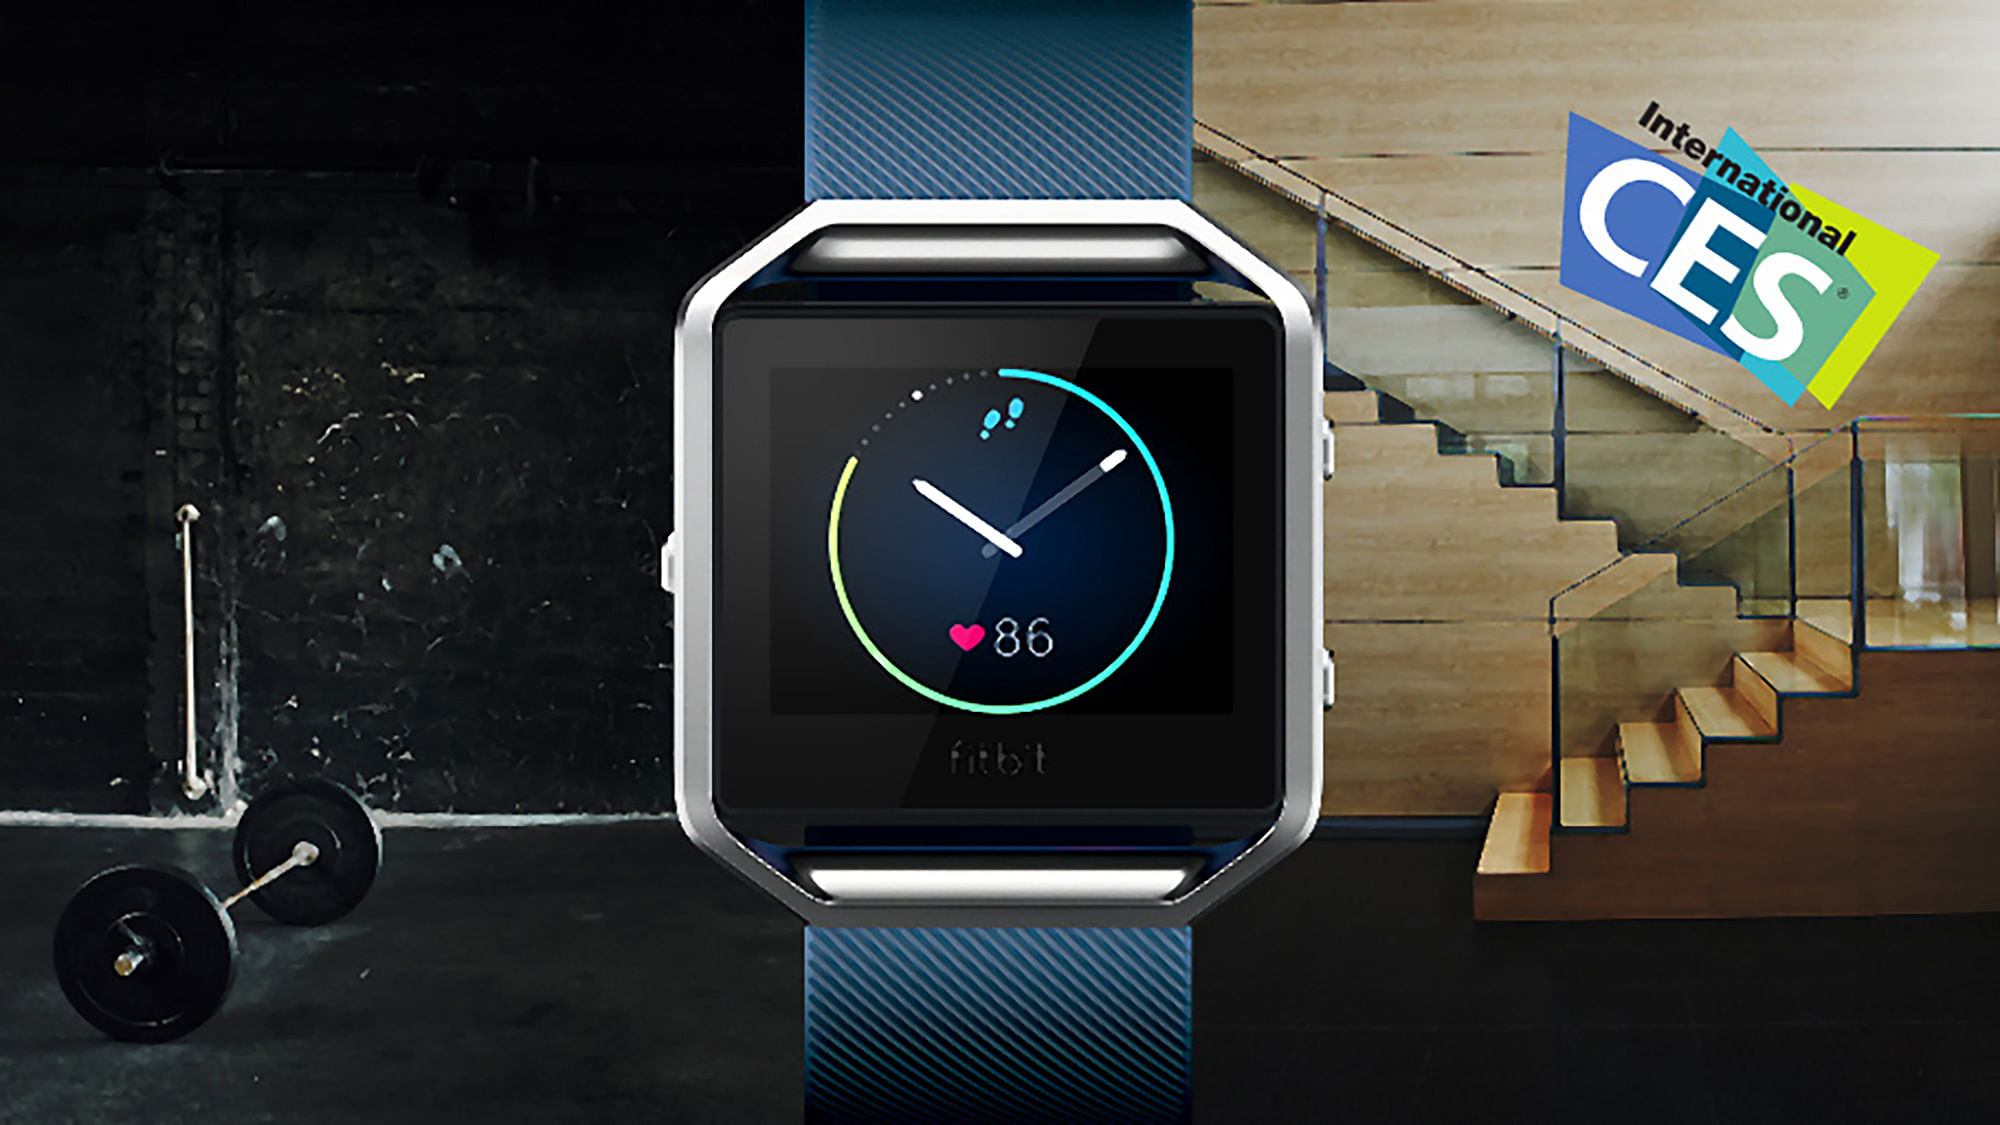 

Fitbit Blaze smart fitness watch. (Photo Courtesy: <a href="https://twitter.com/fitbit">Fitbit/Twitter</a>)